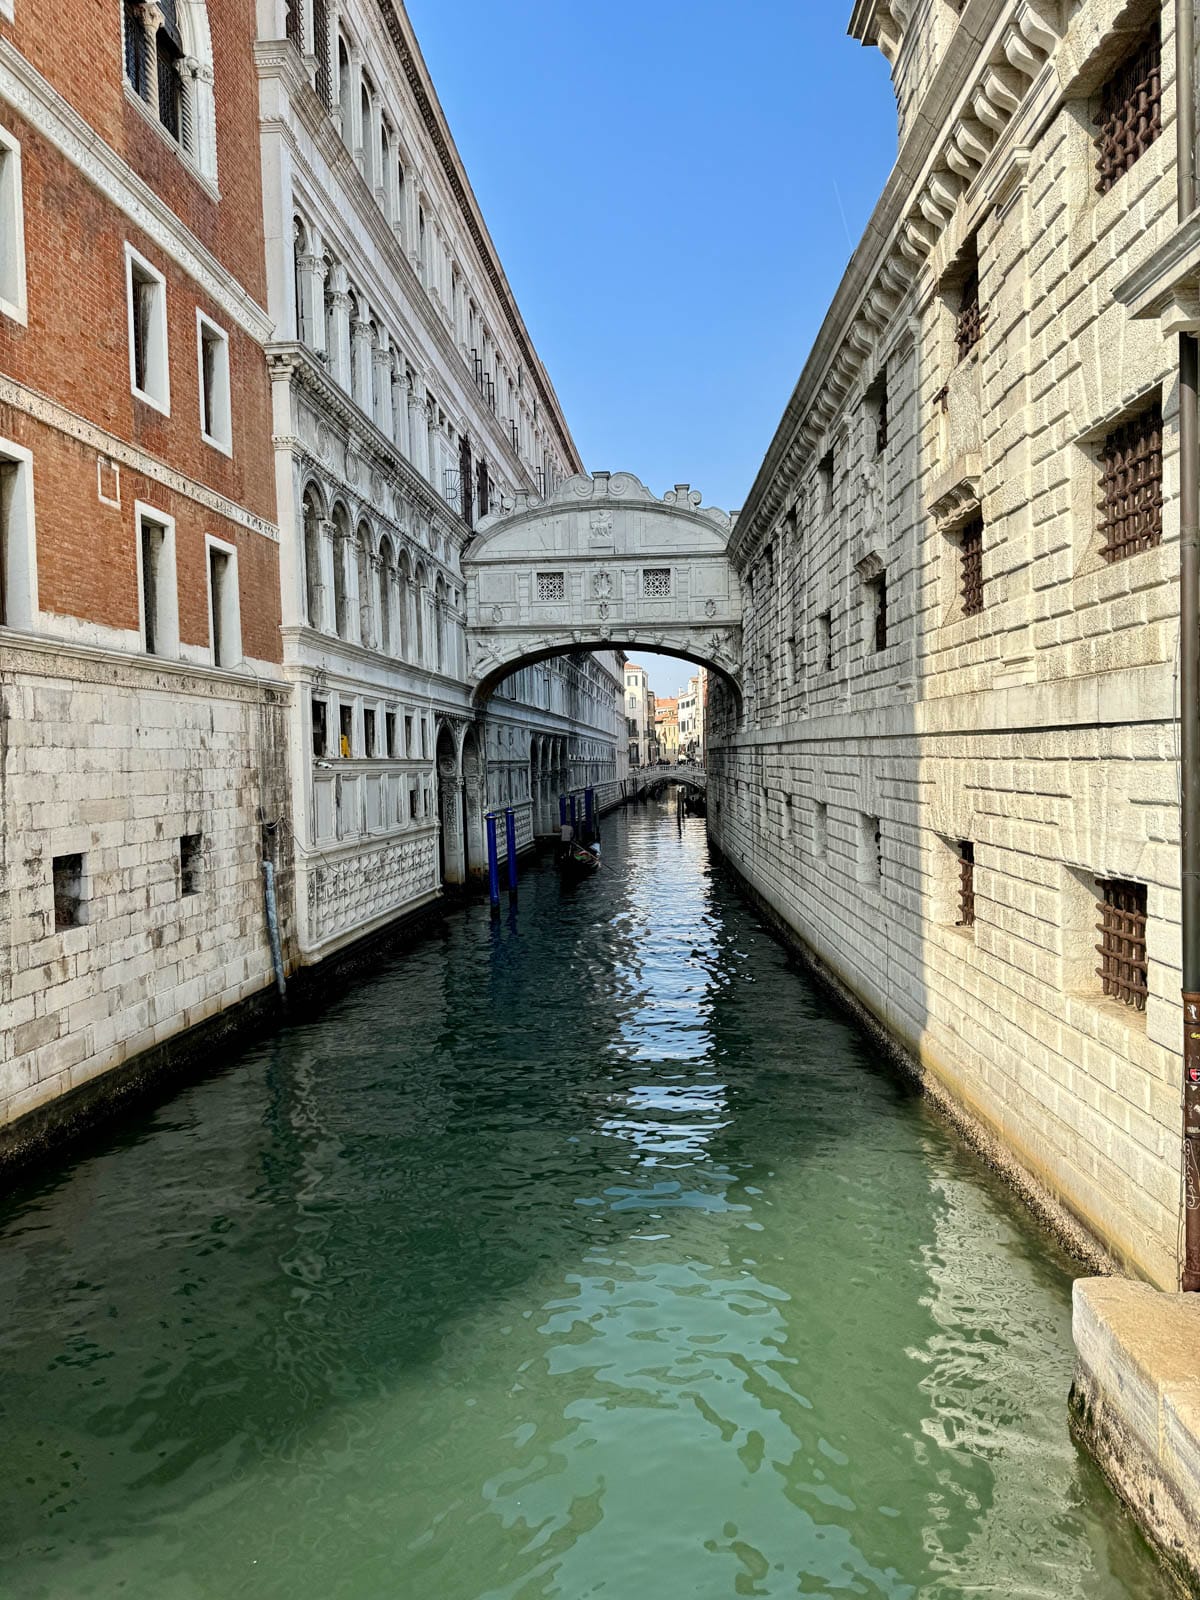 Bridge of Sighs in Venice Italy.